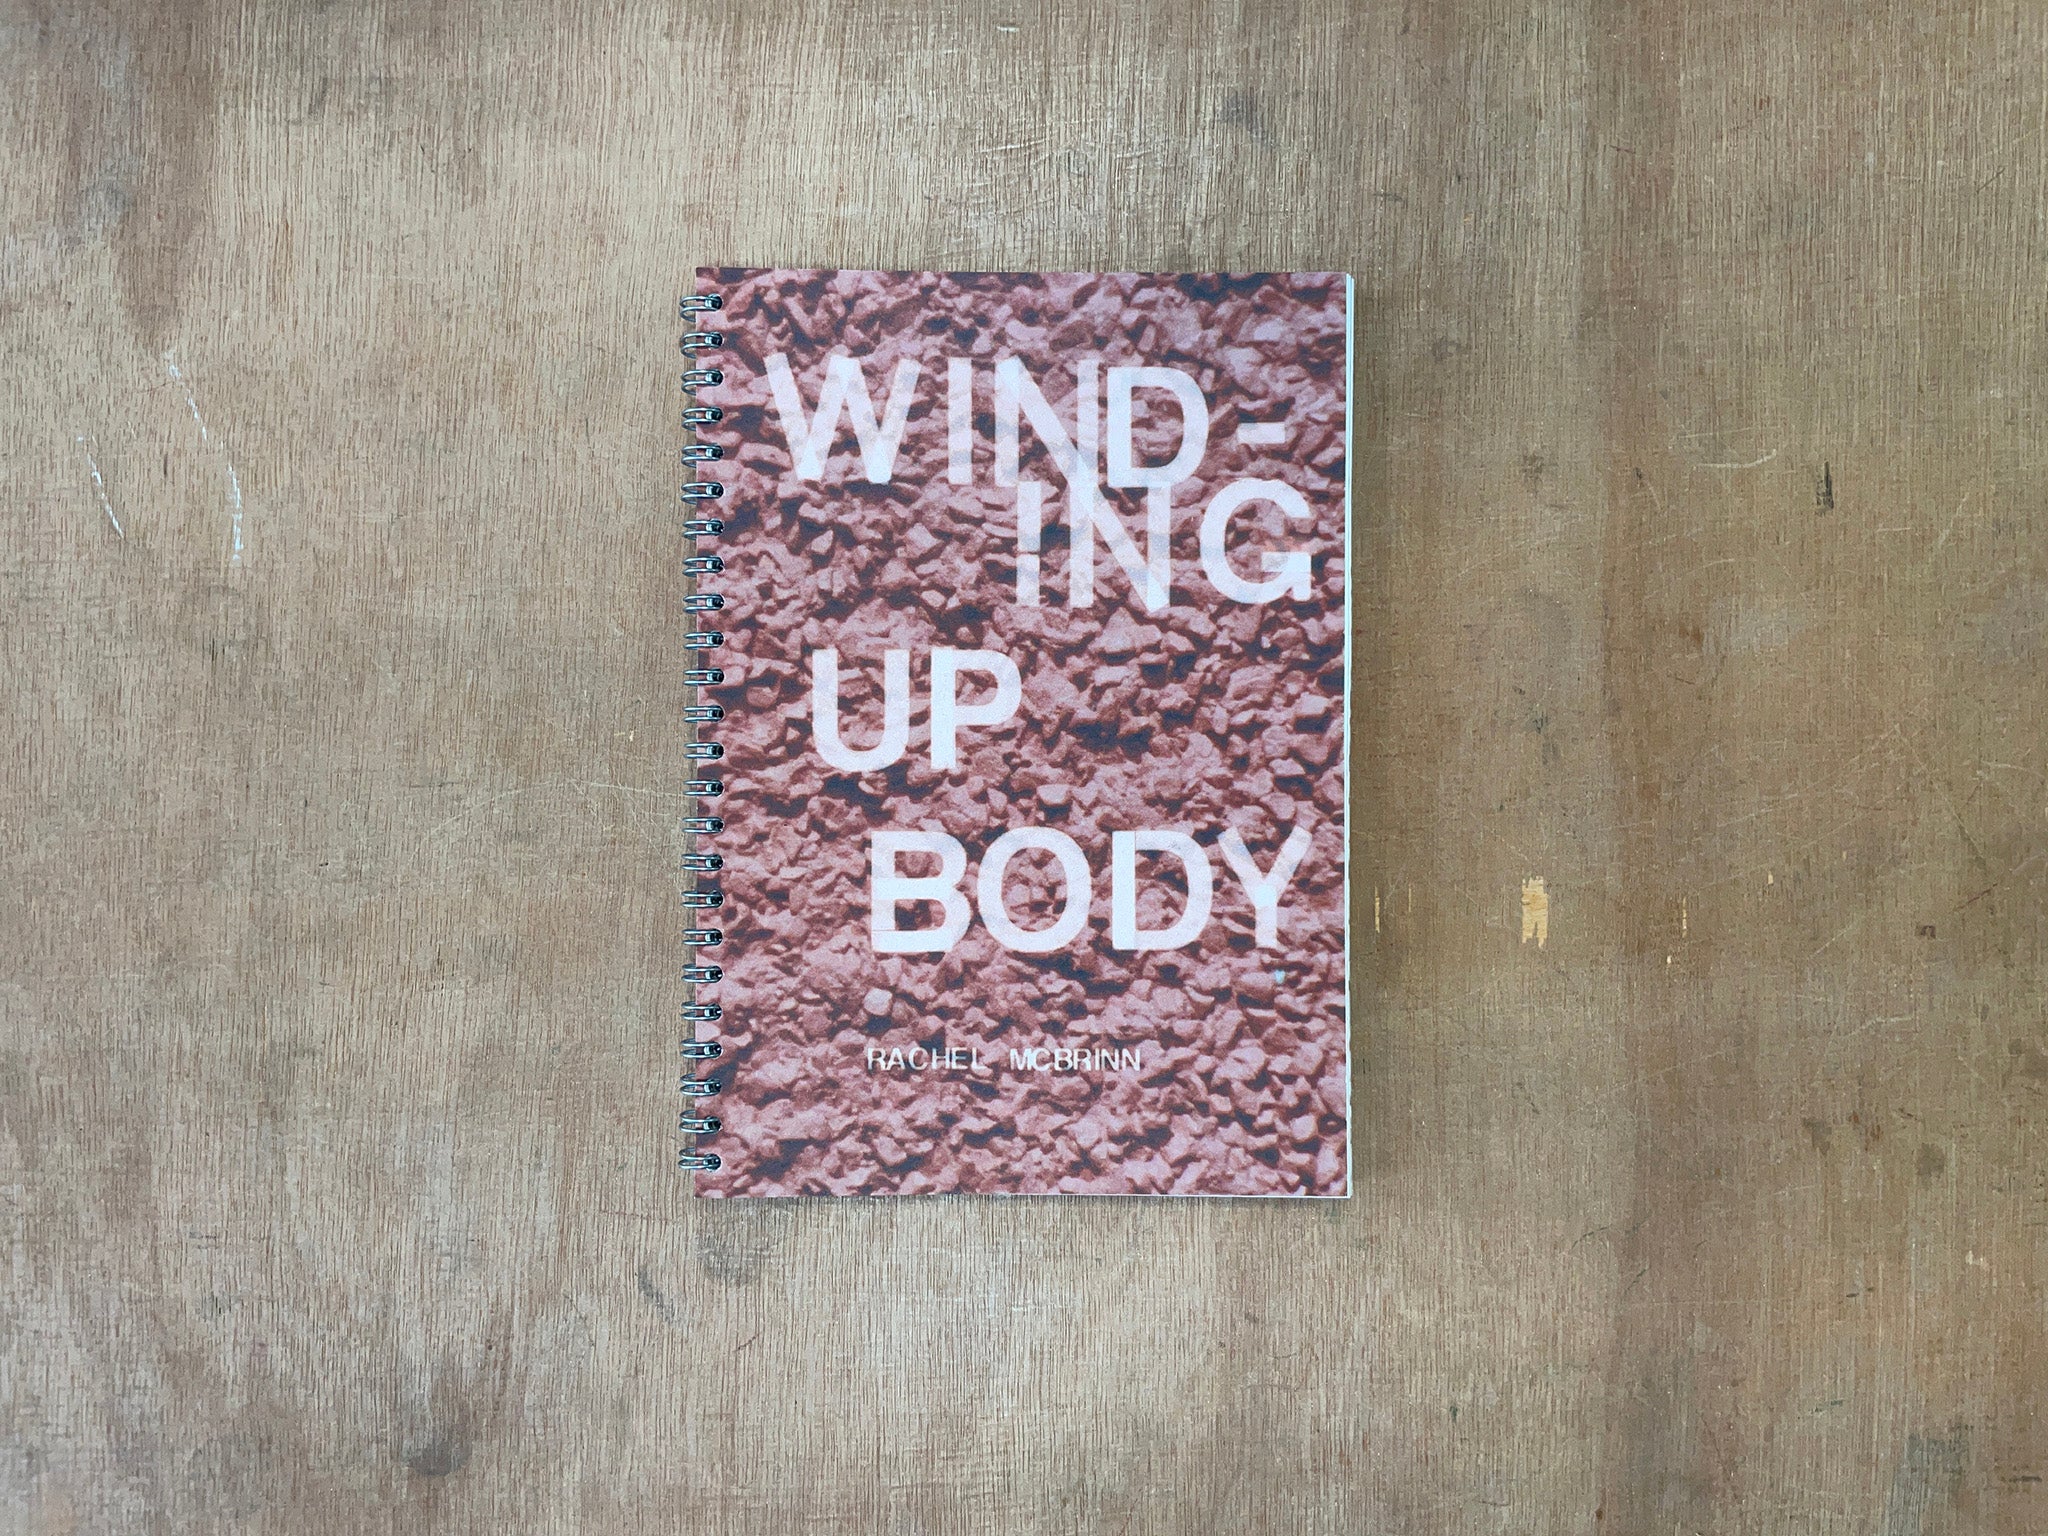 WINDING UP BODY by Rachel McBrinn